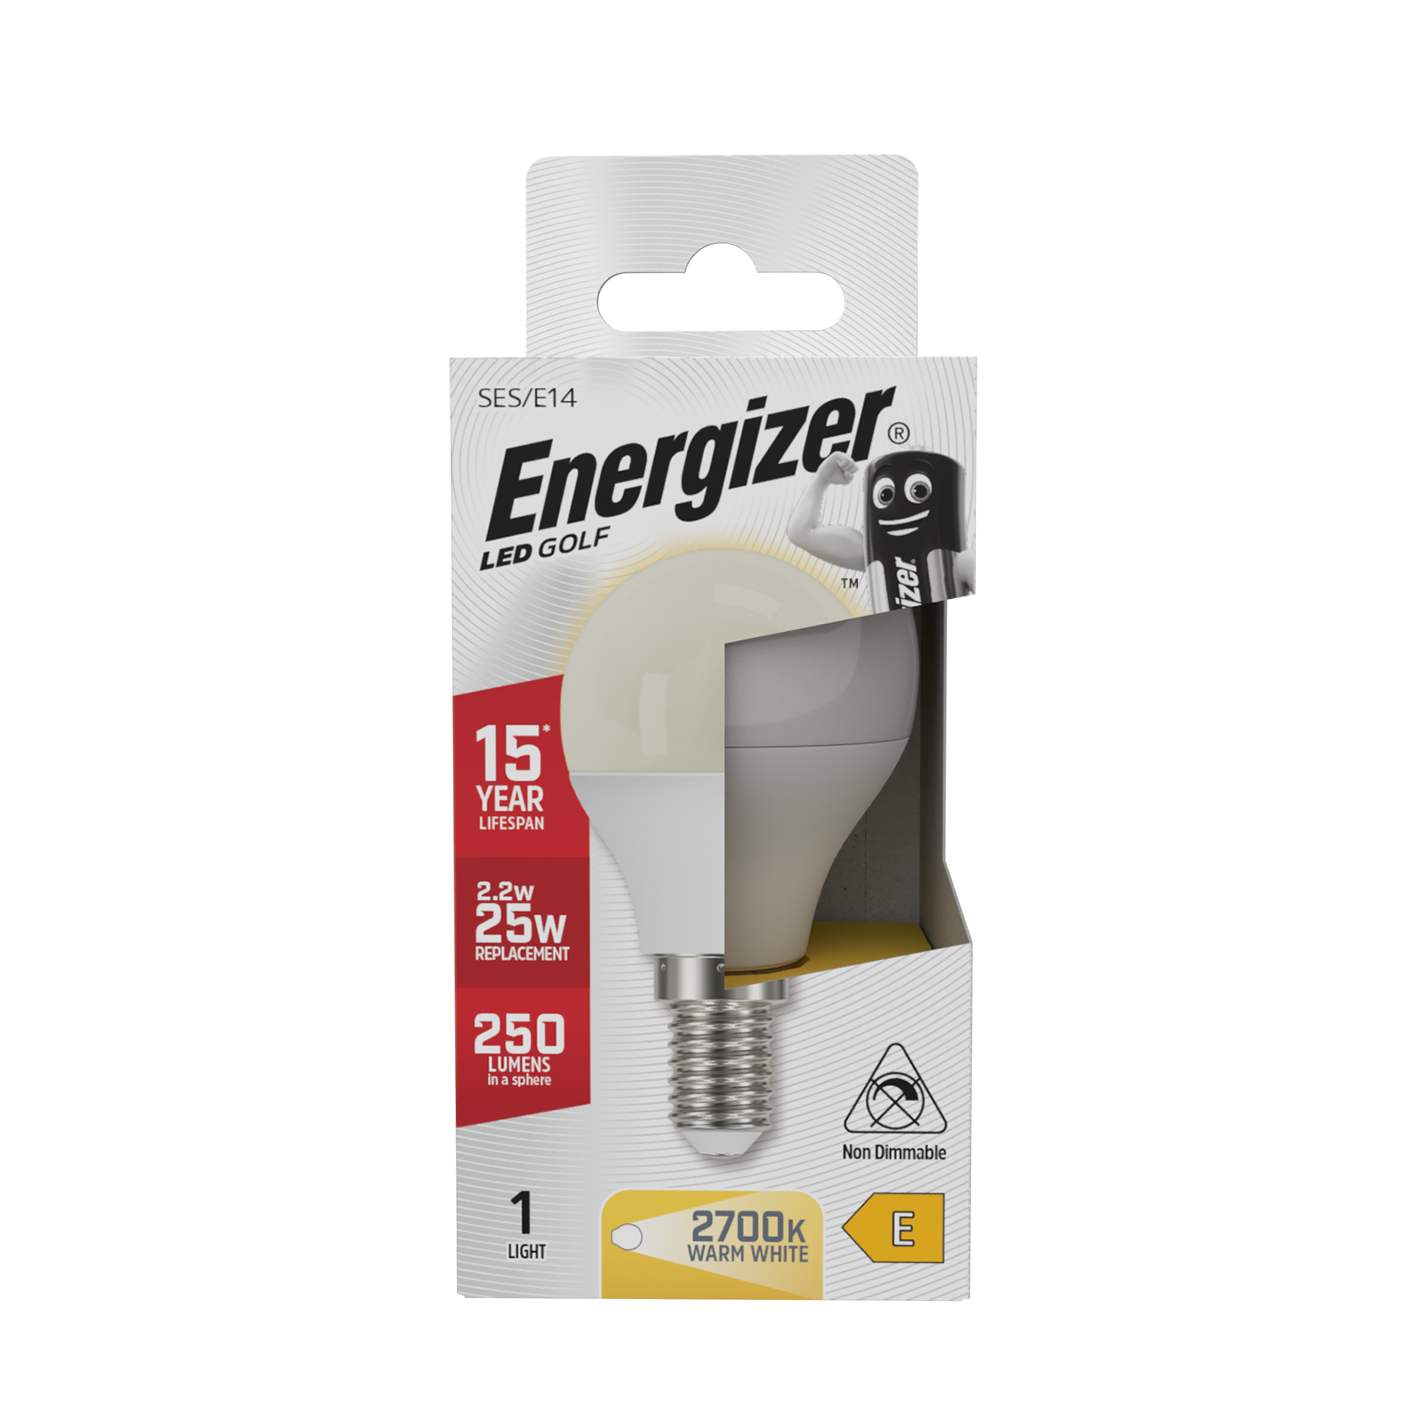 Energizer LED Golf E14 (SES) 250 Lumens 2.2W 2,700K (Warm White), Box of 1